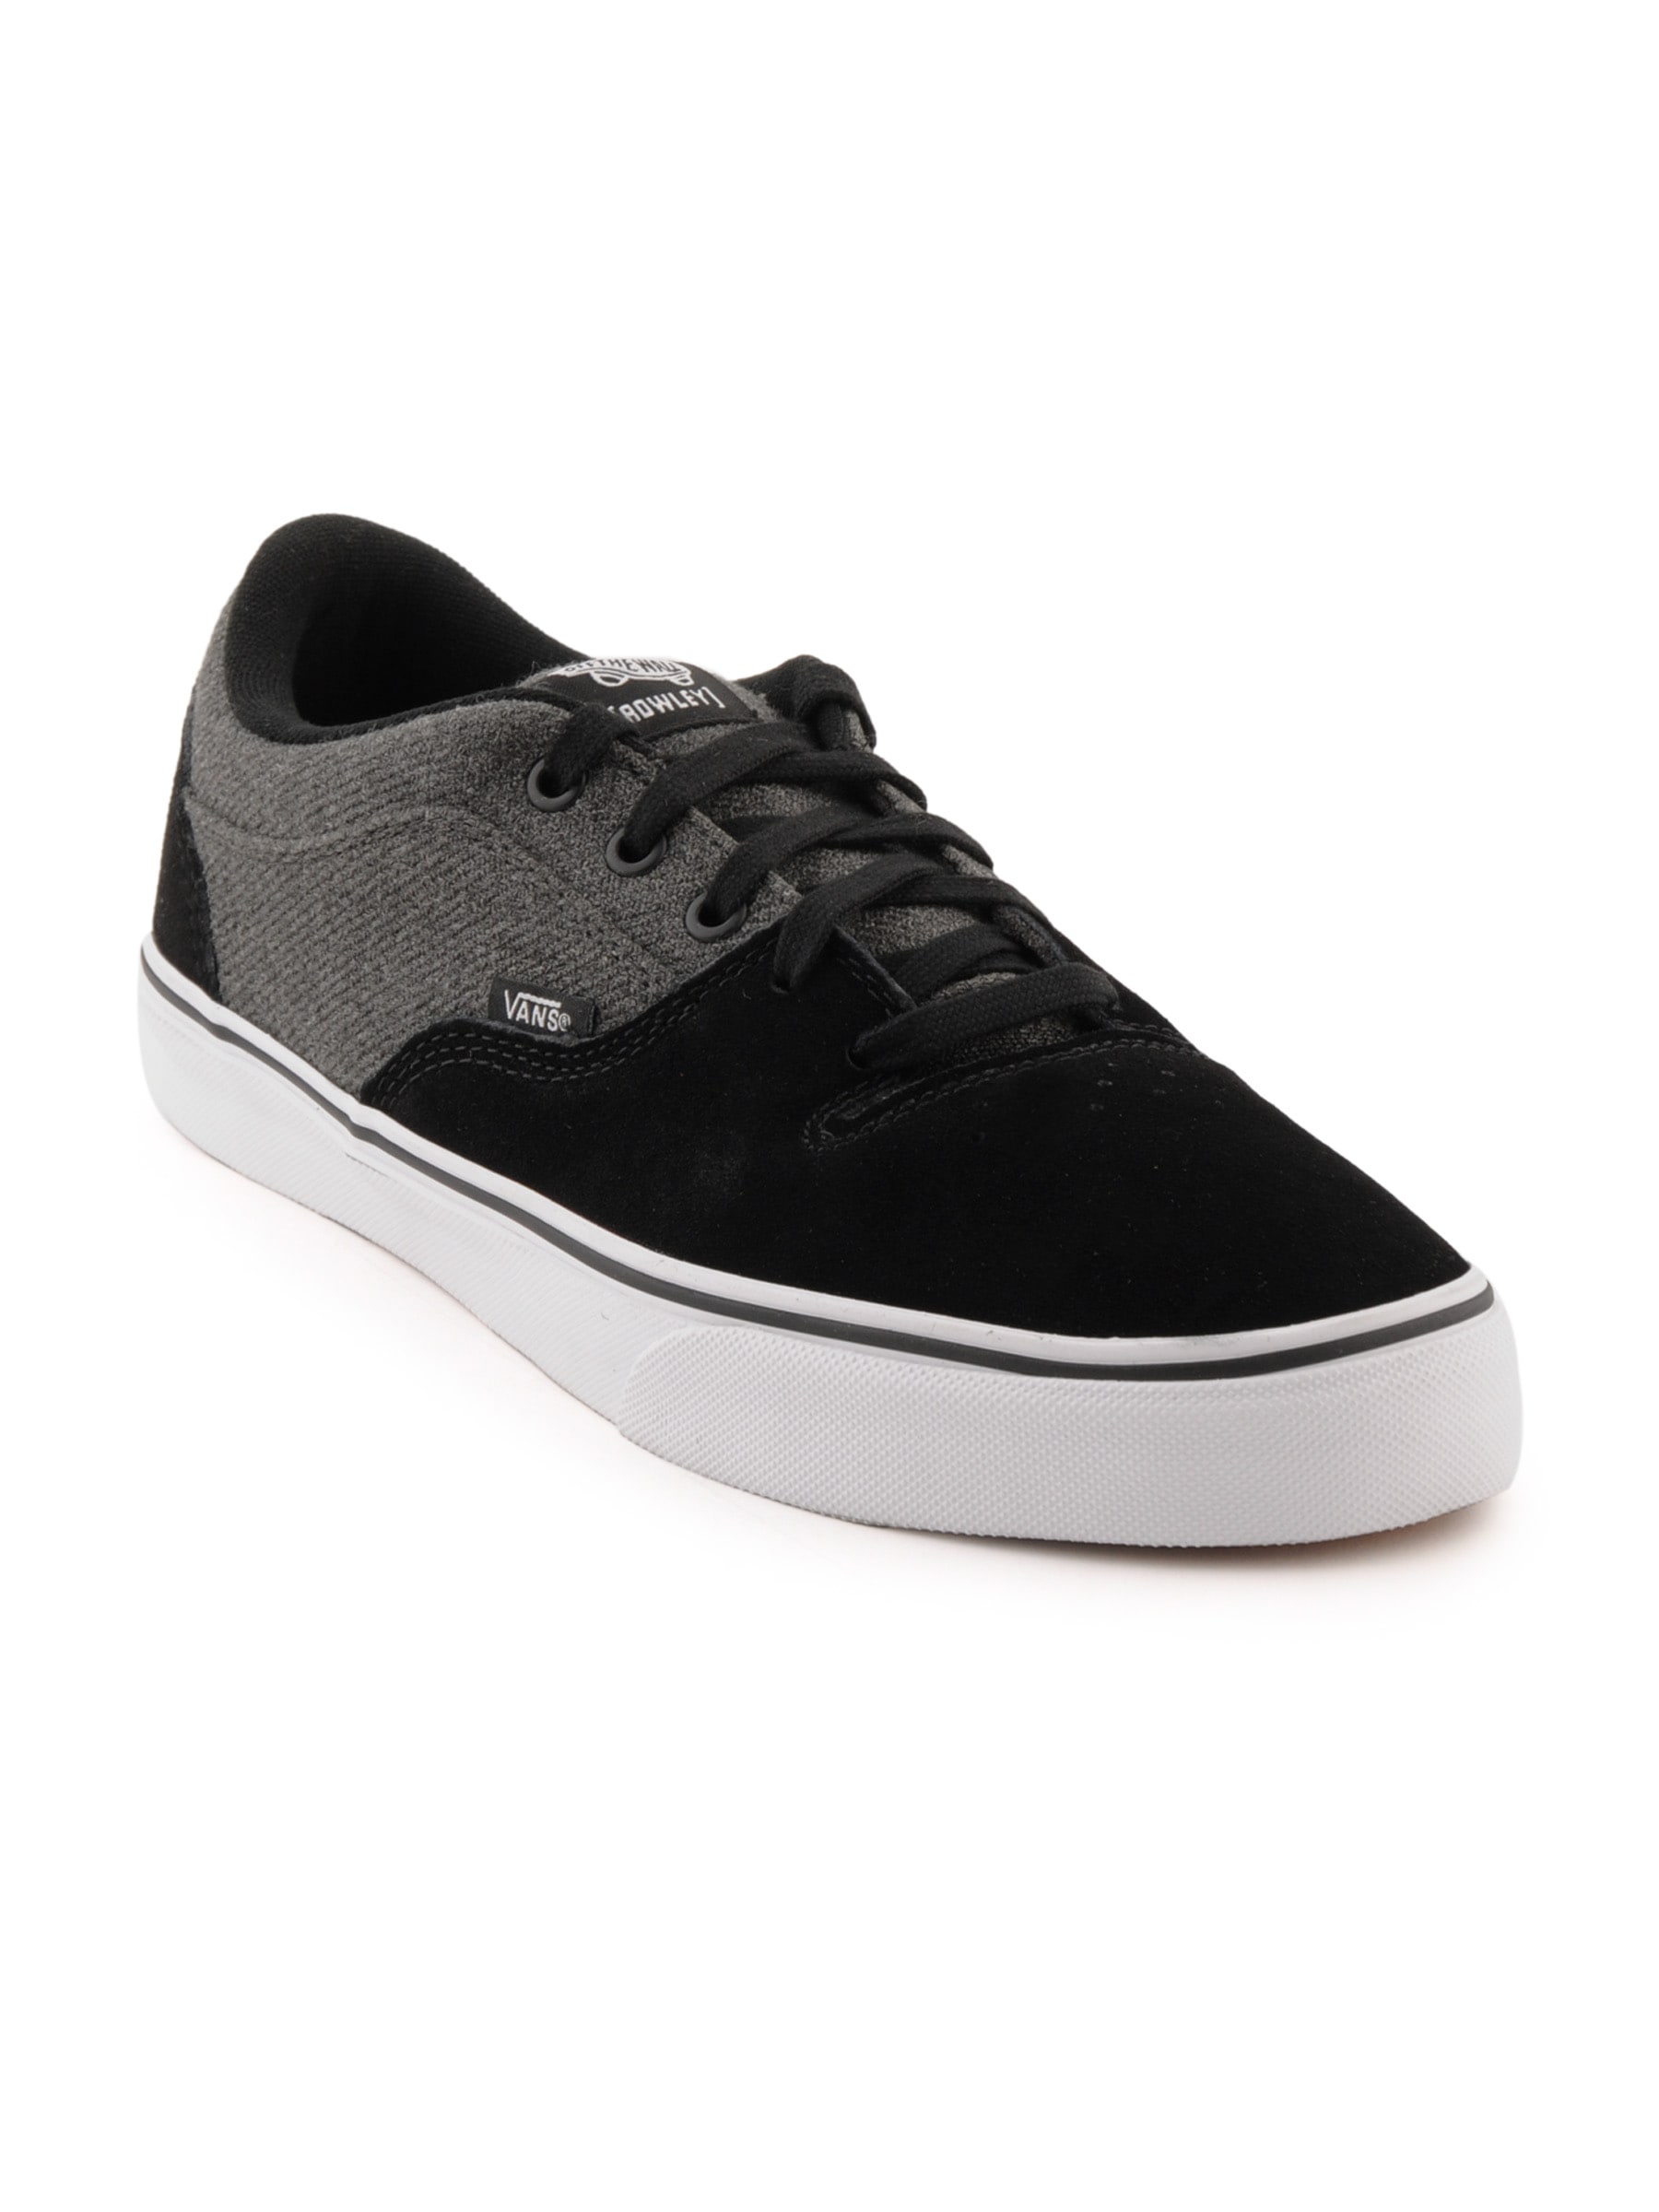 Vans Men Rowley Style 99'S Black Casual Shoes